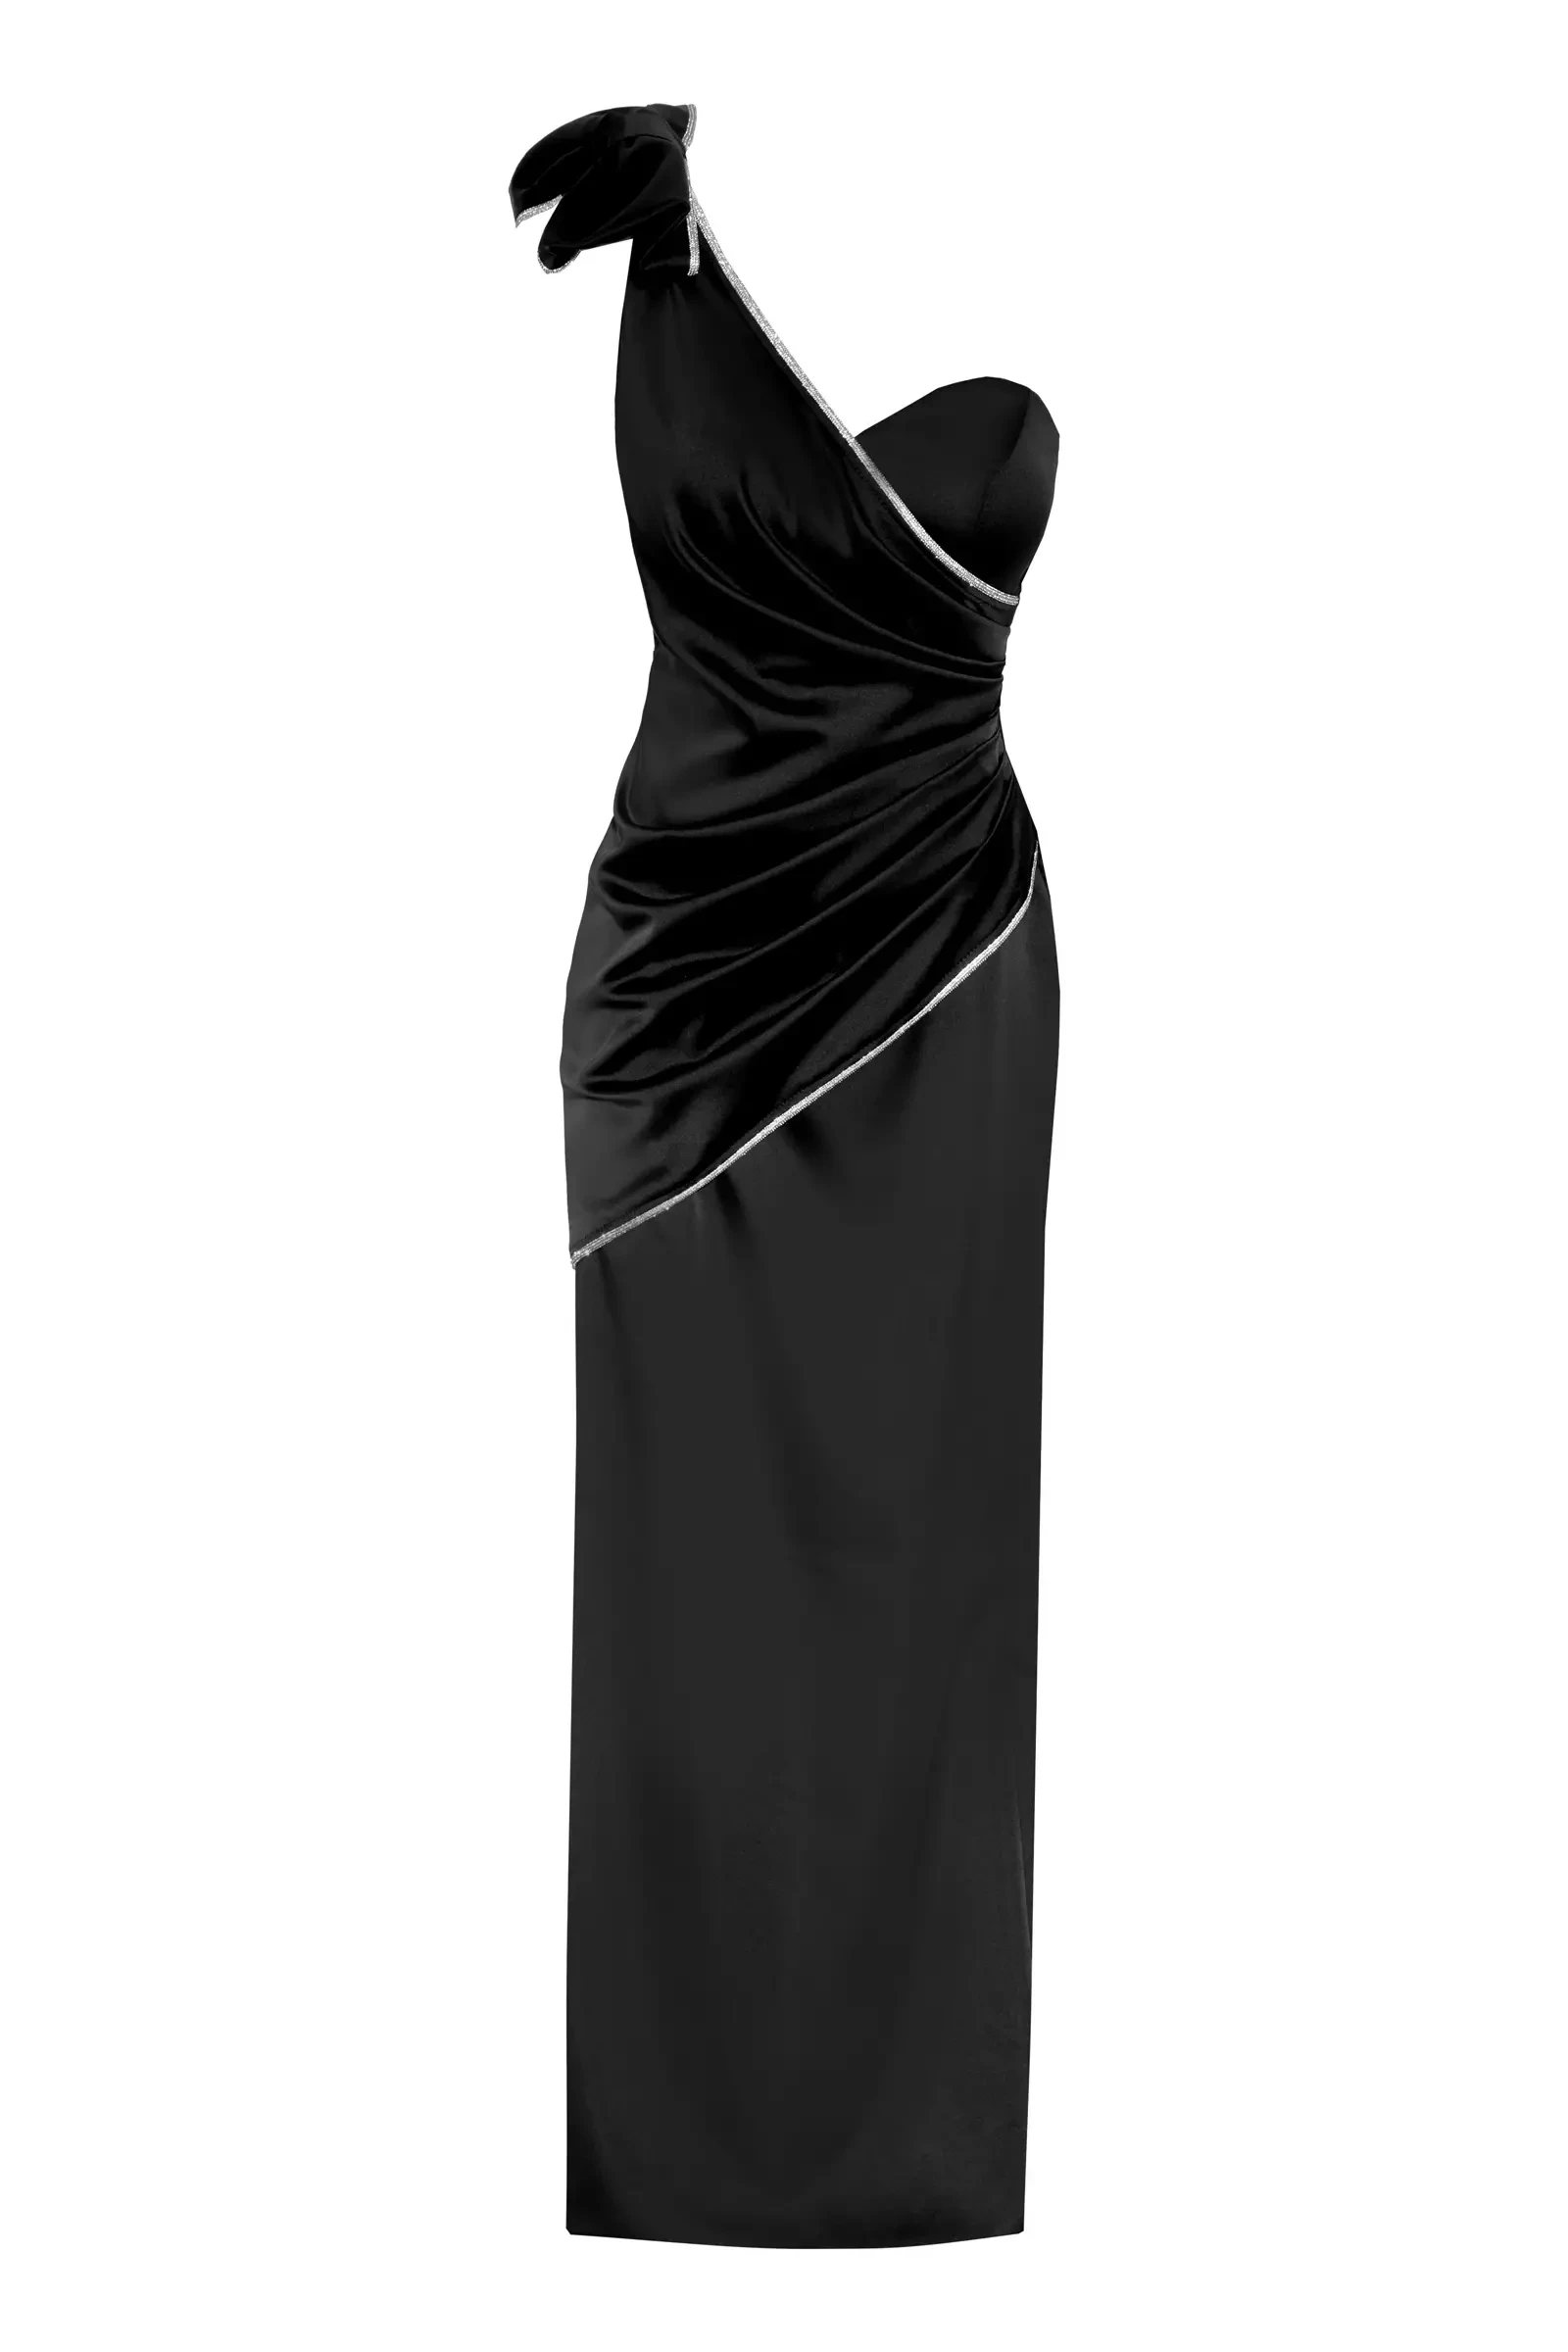 Black satin one arm maxi dress